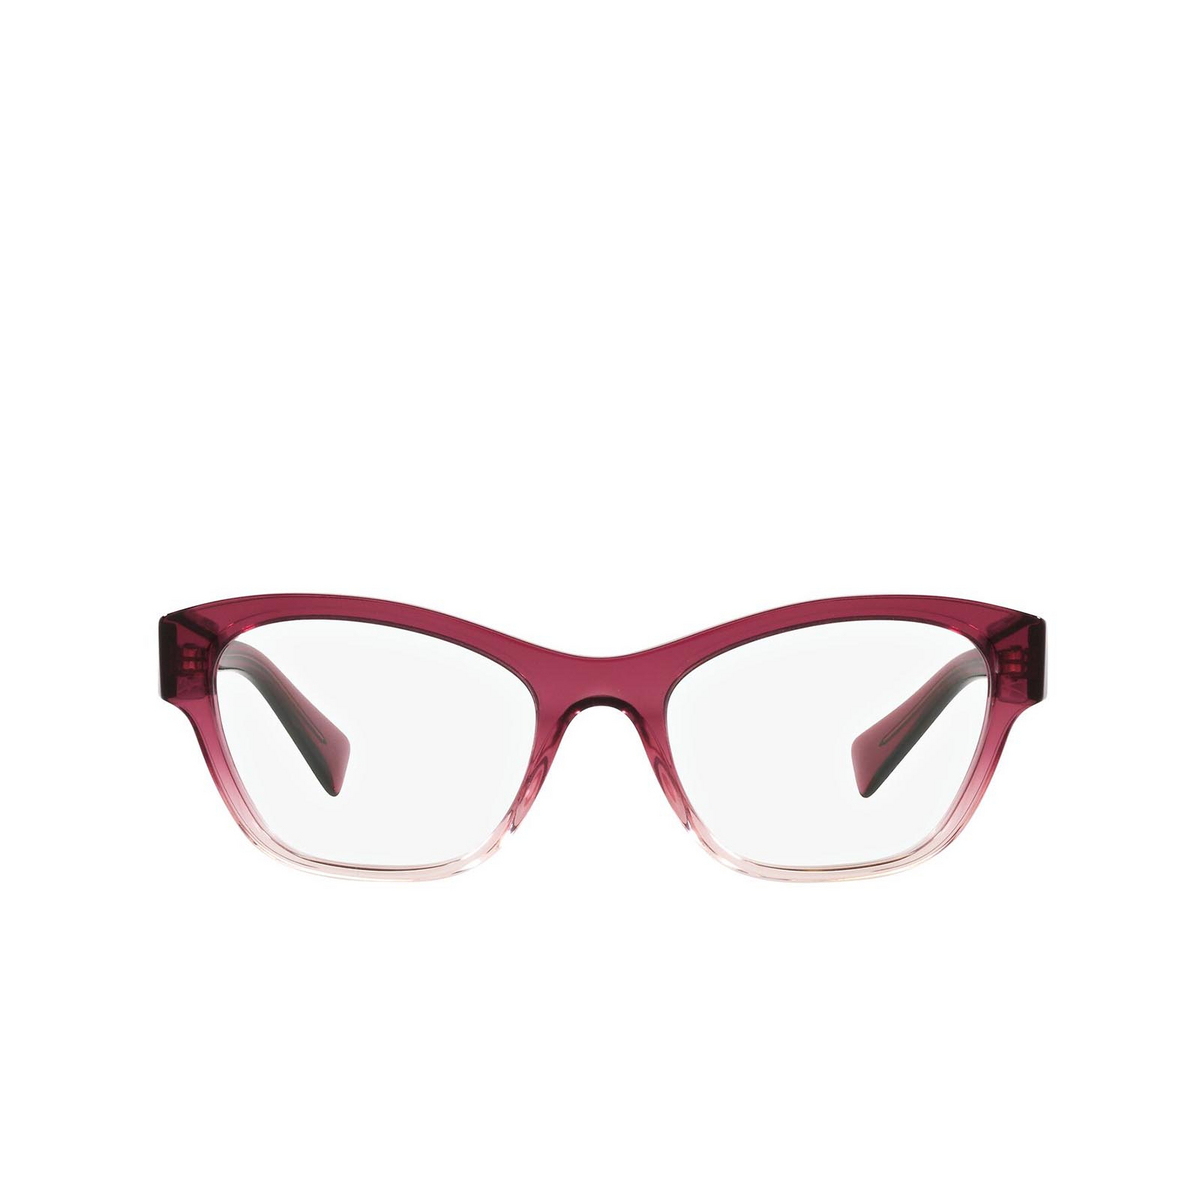 Miu Miu® Irregular Eyeglasses: MU 08TV color Gradient Bordeaux 04T1O1 - front view.